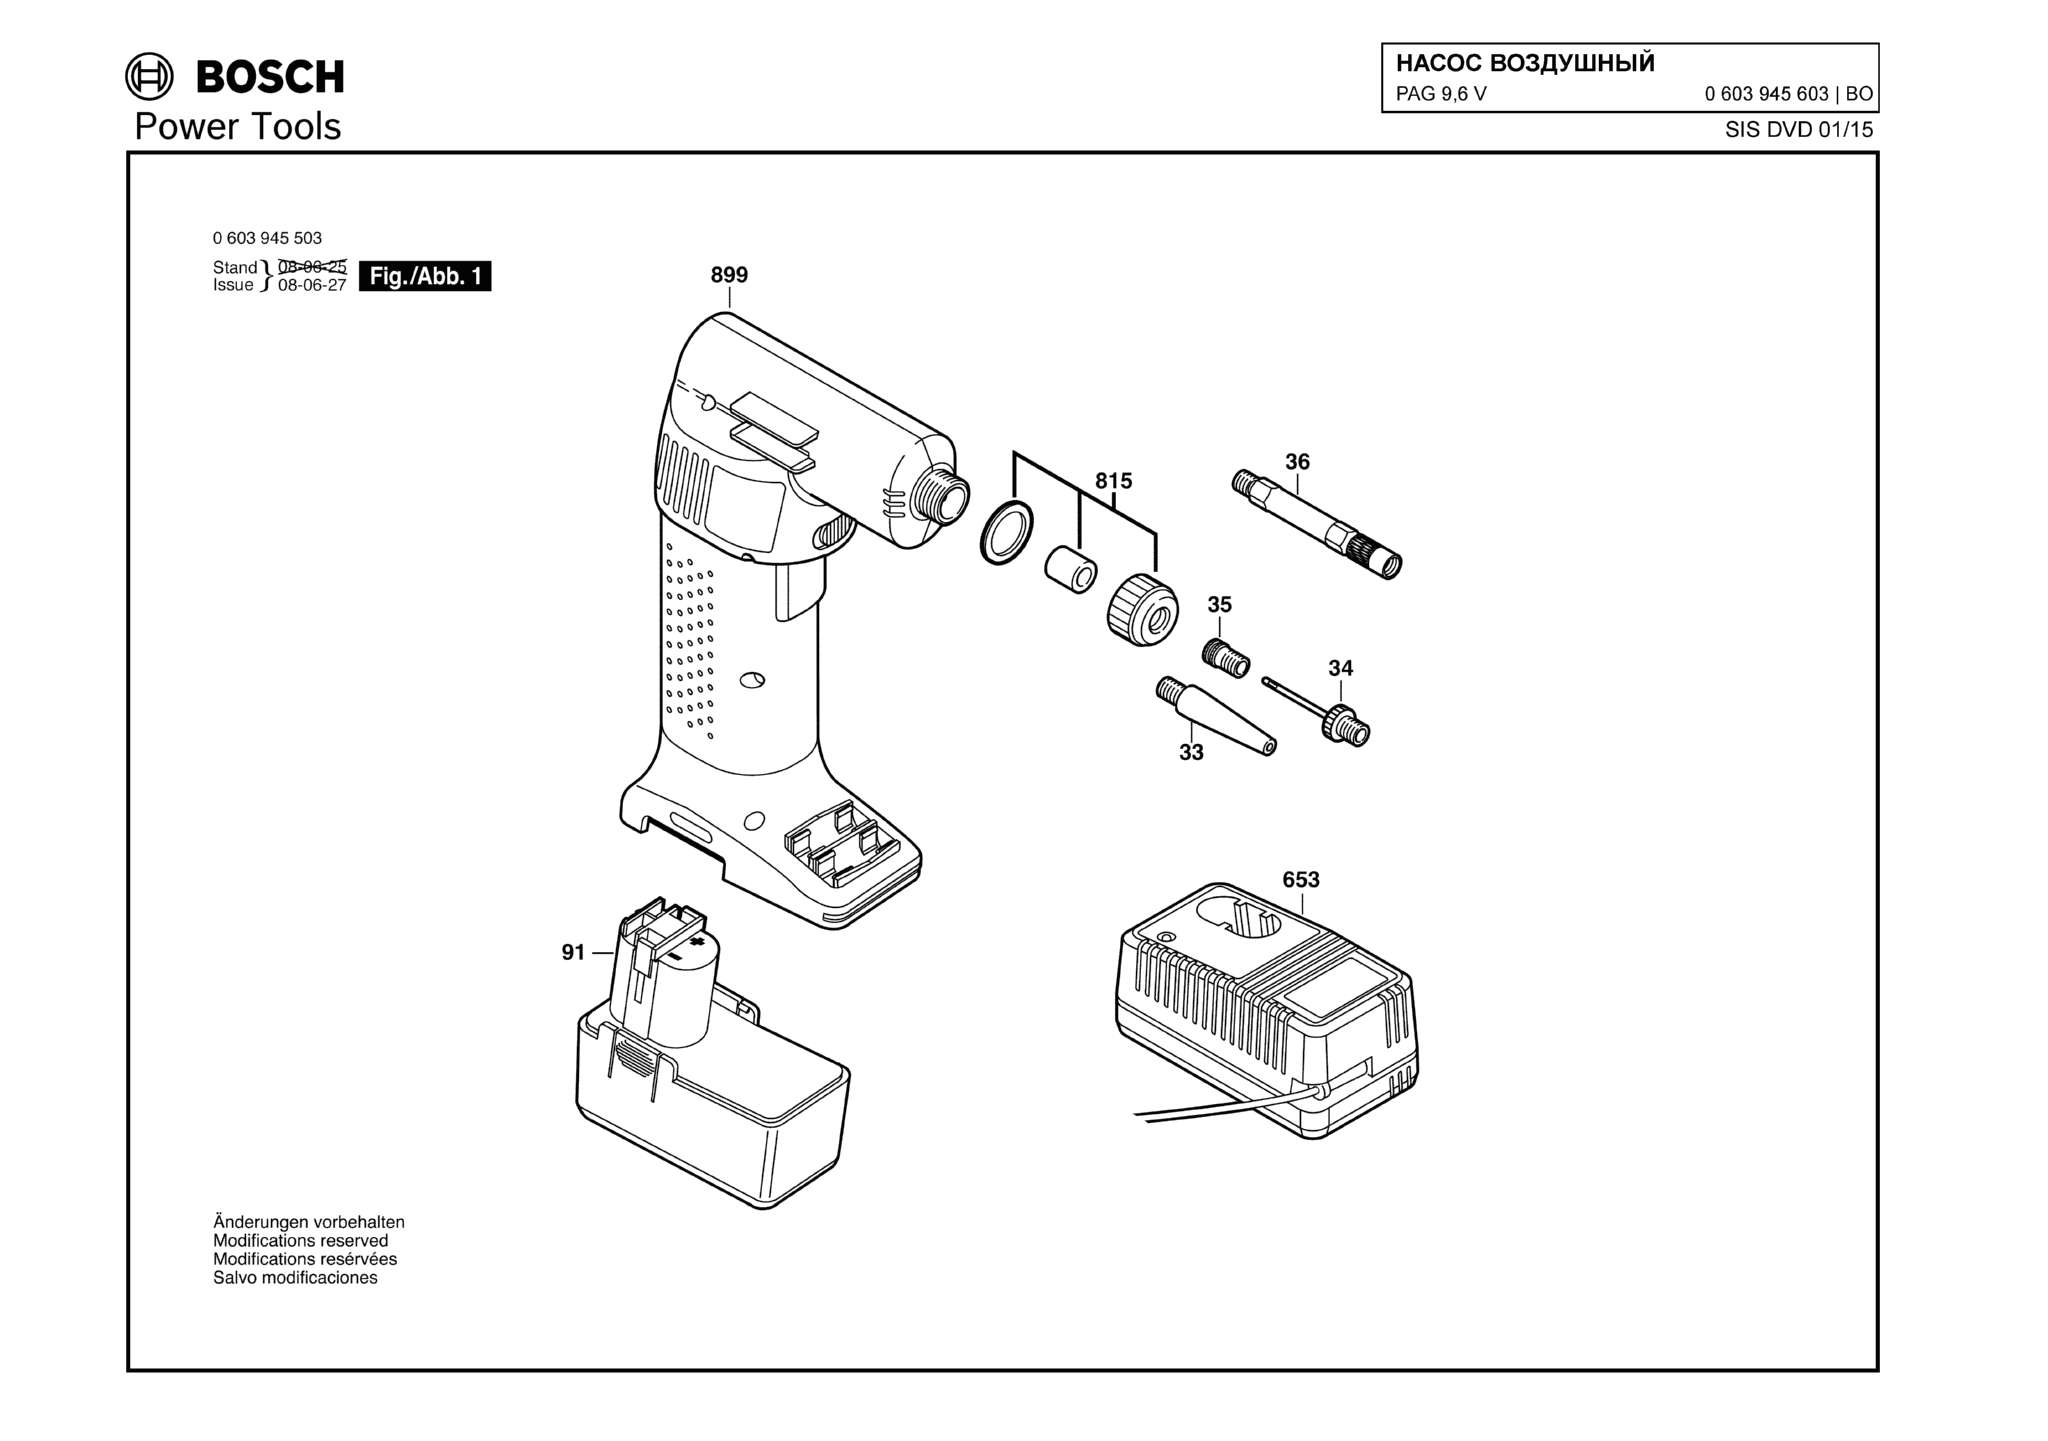 Запчасти, схема и деталировка Bosch 9,6 V (ТИП 0603945603)